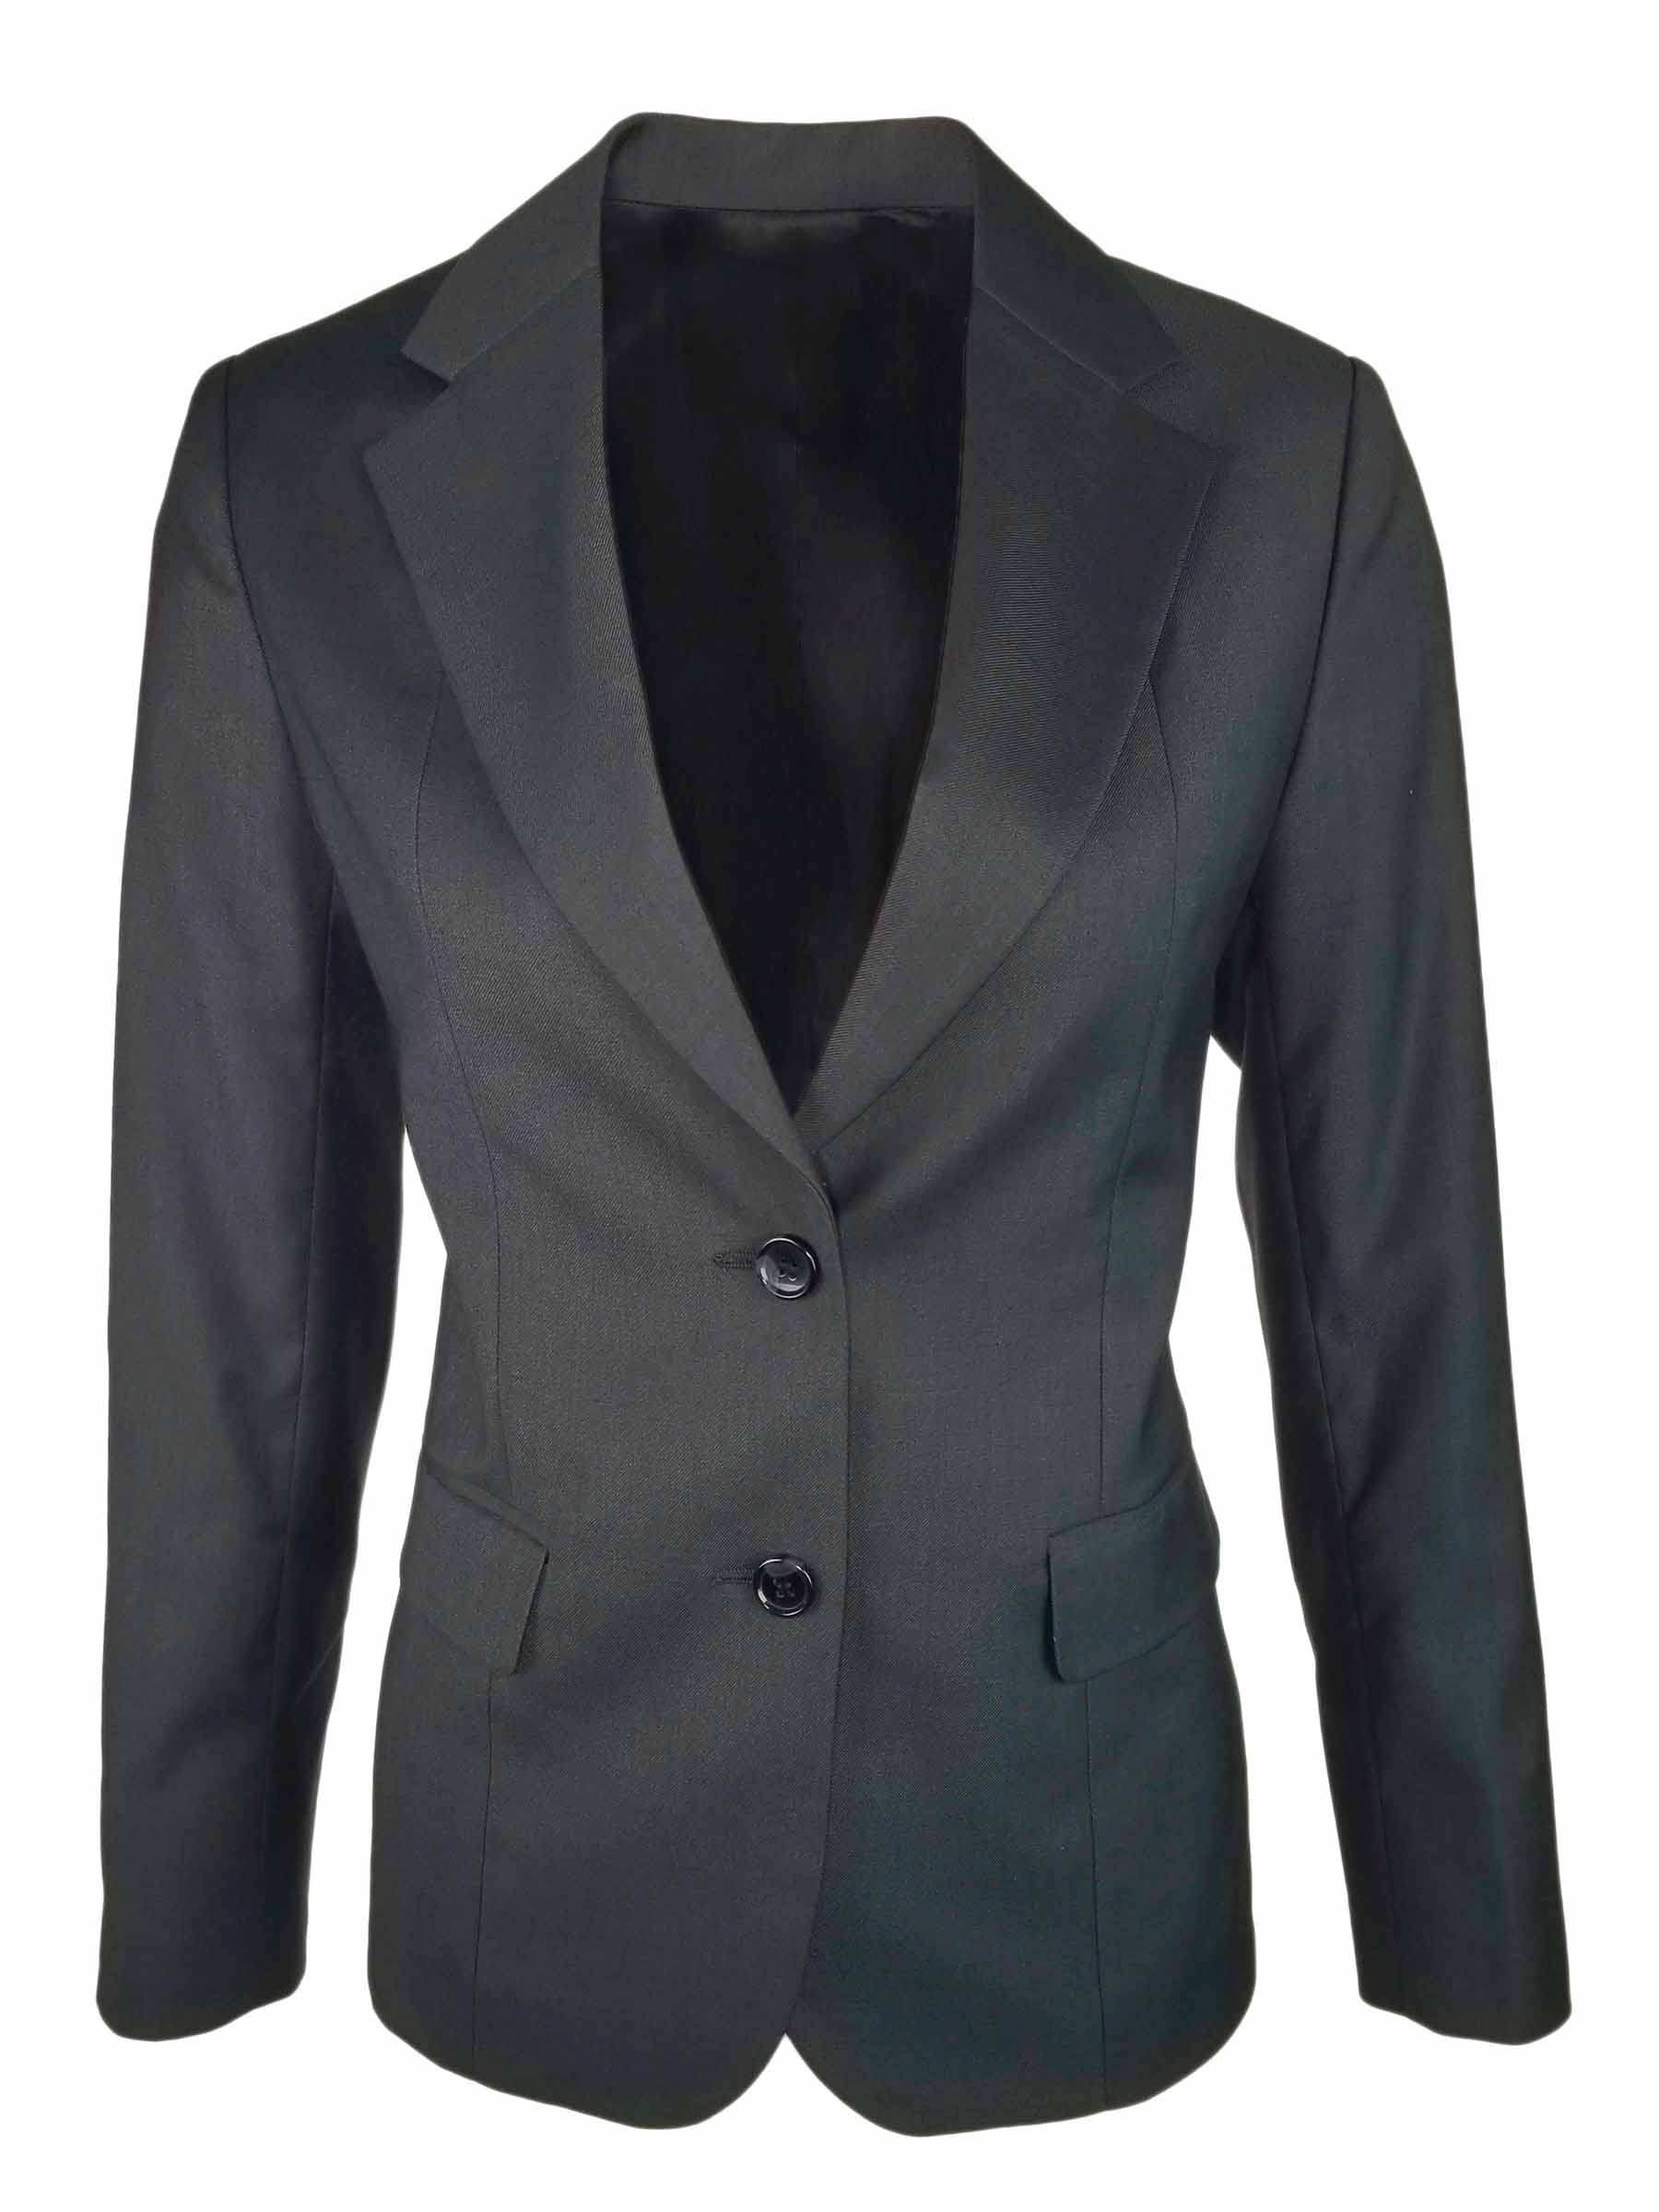 Women's 2 Button Wool Blend Jacket - Charcoal - Uniform Edit